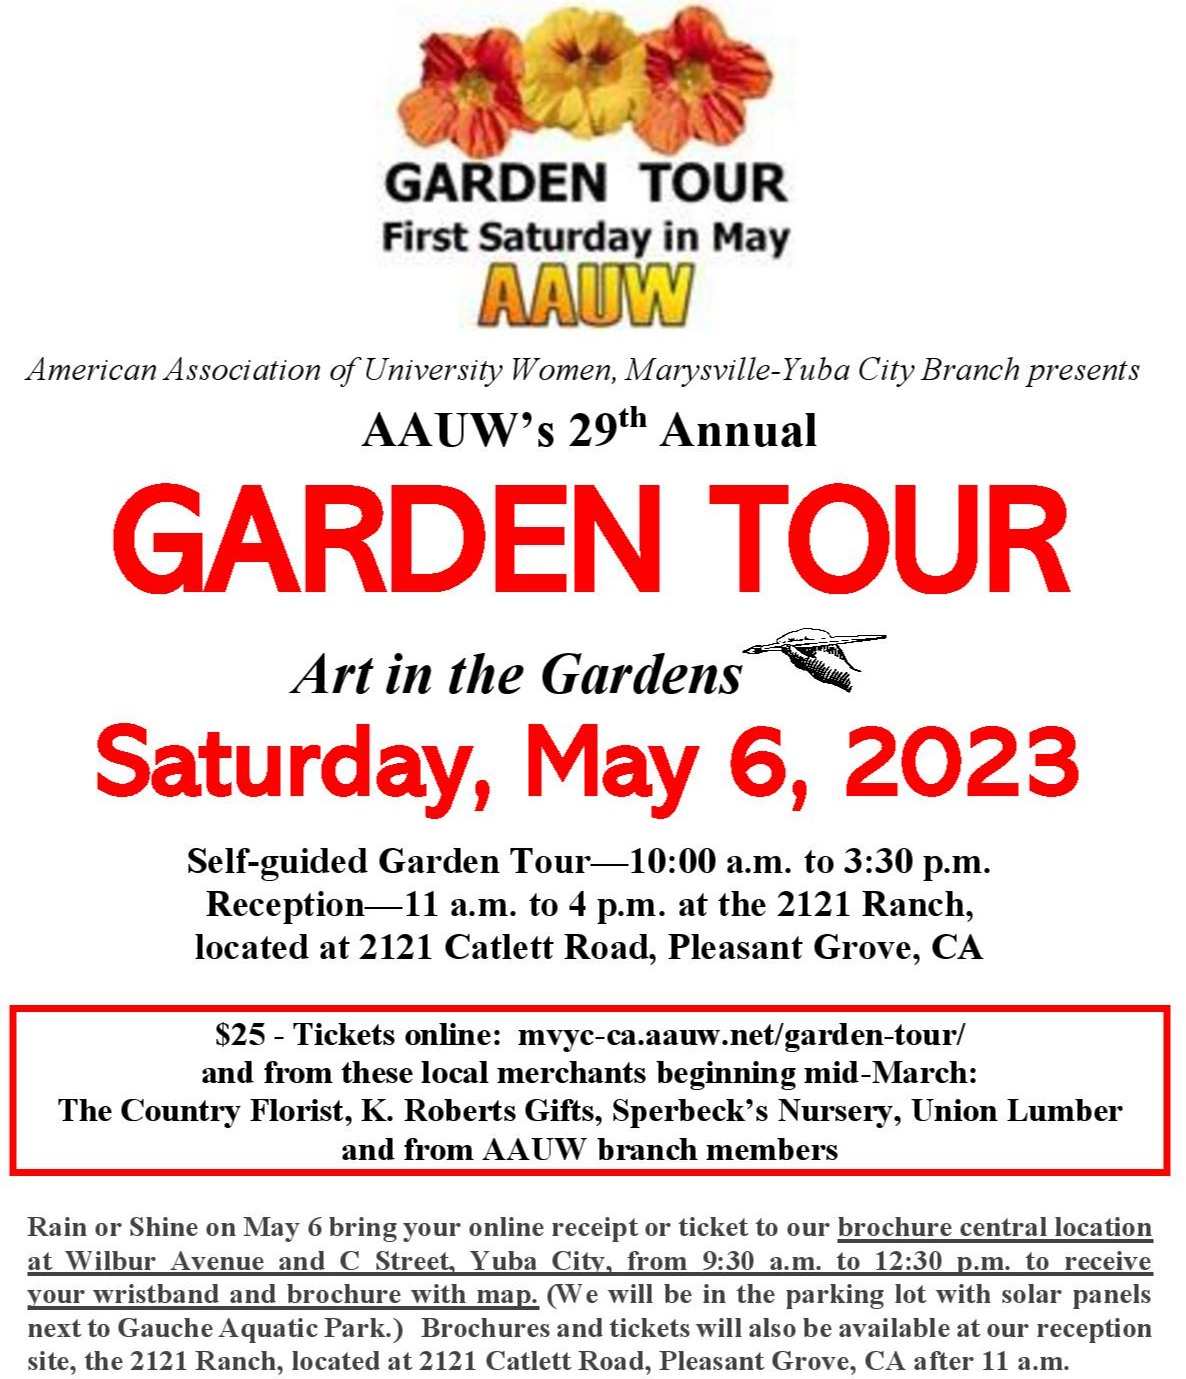 AAUW Garden Tour MarysvilleYuba City (CA) Branch